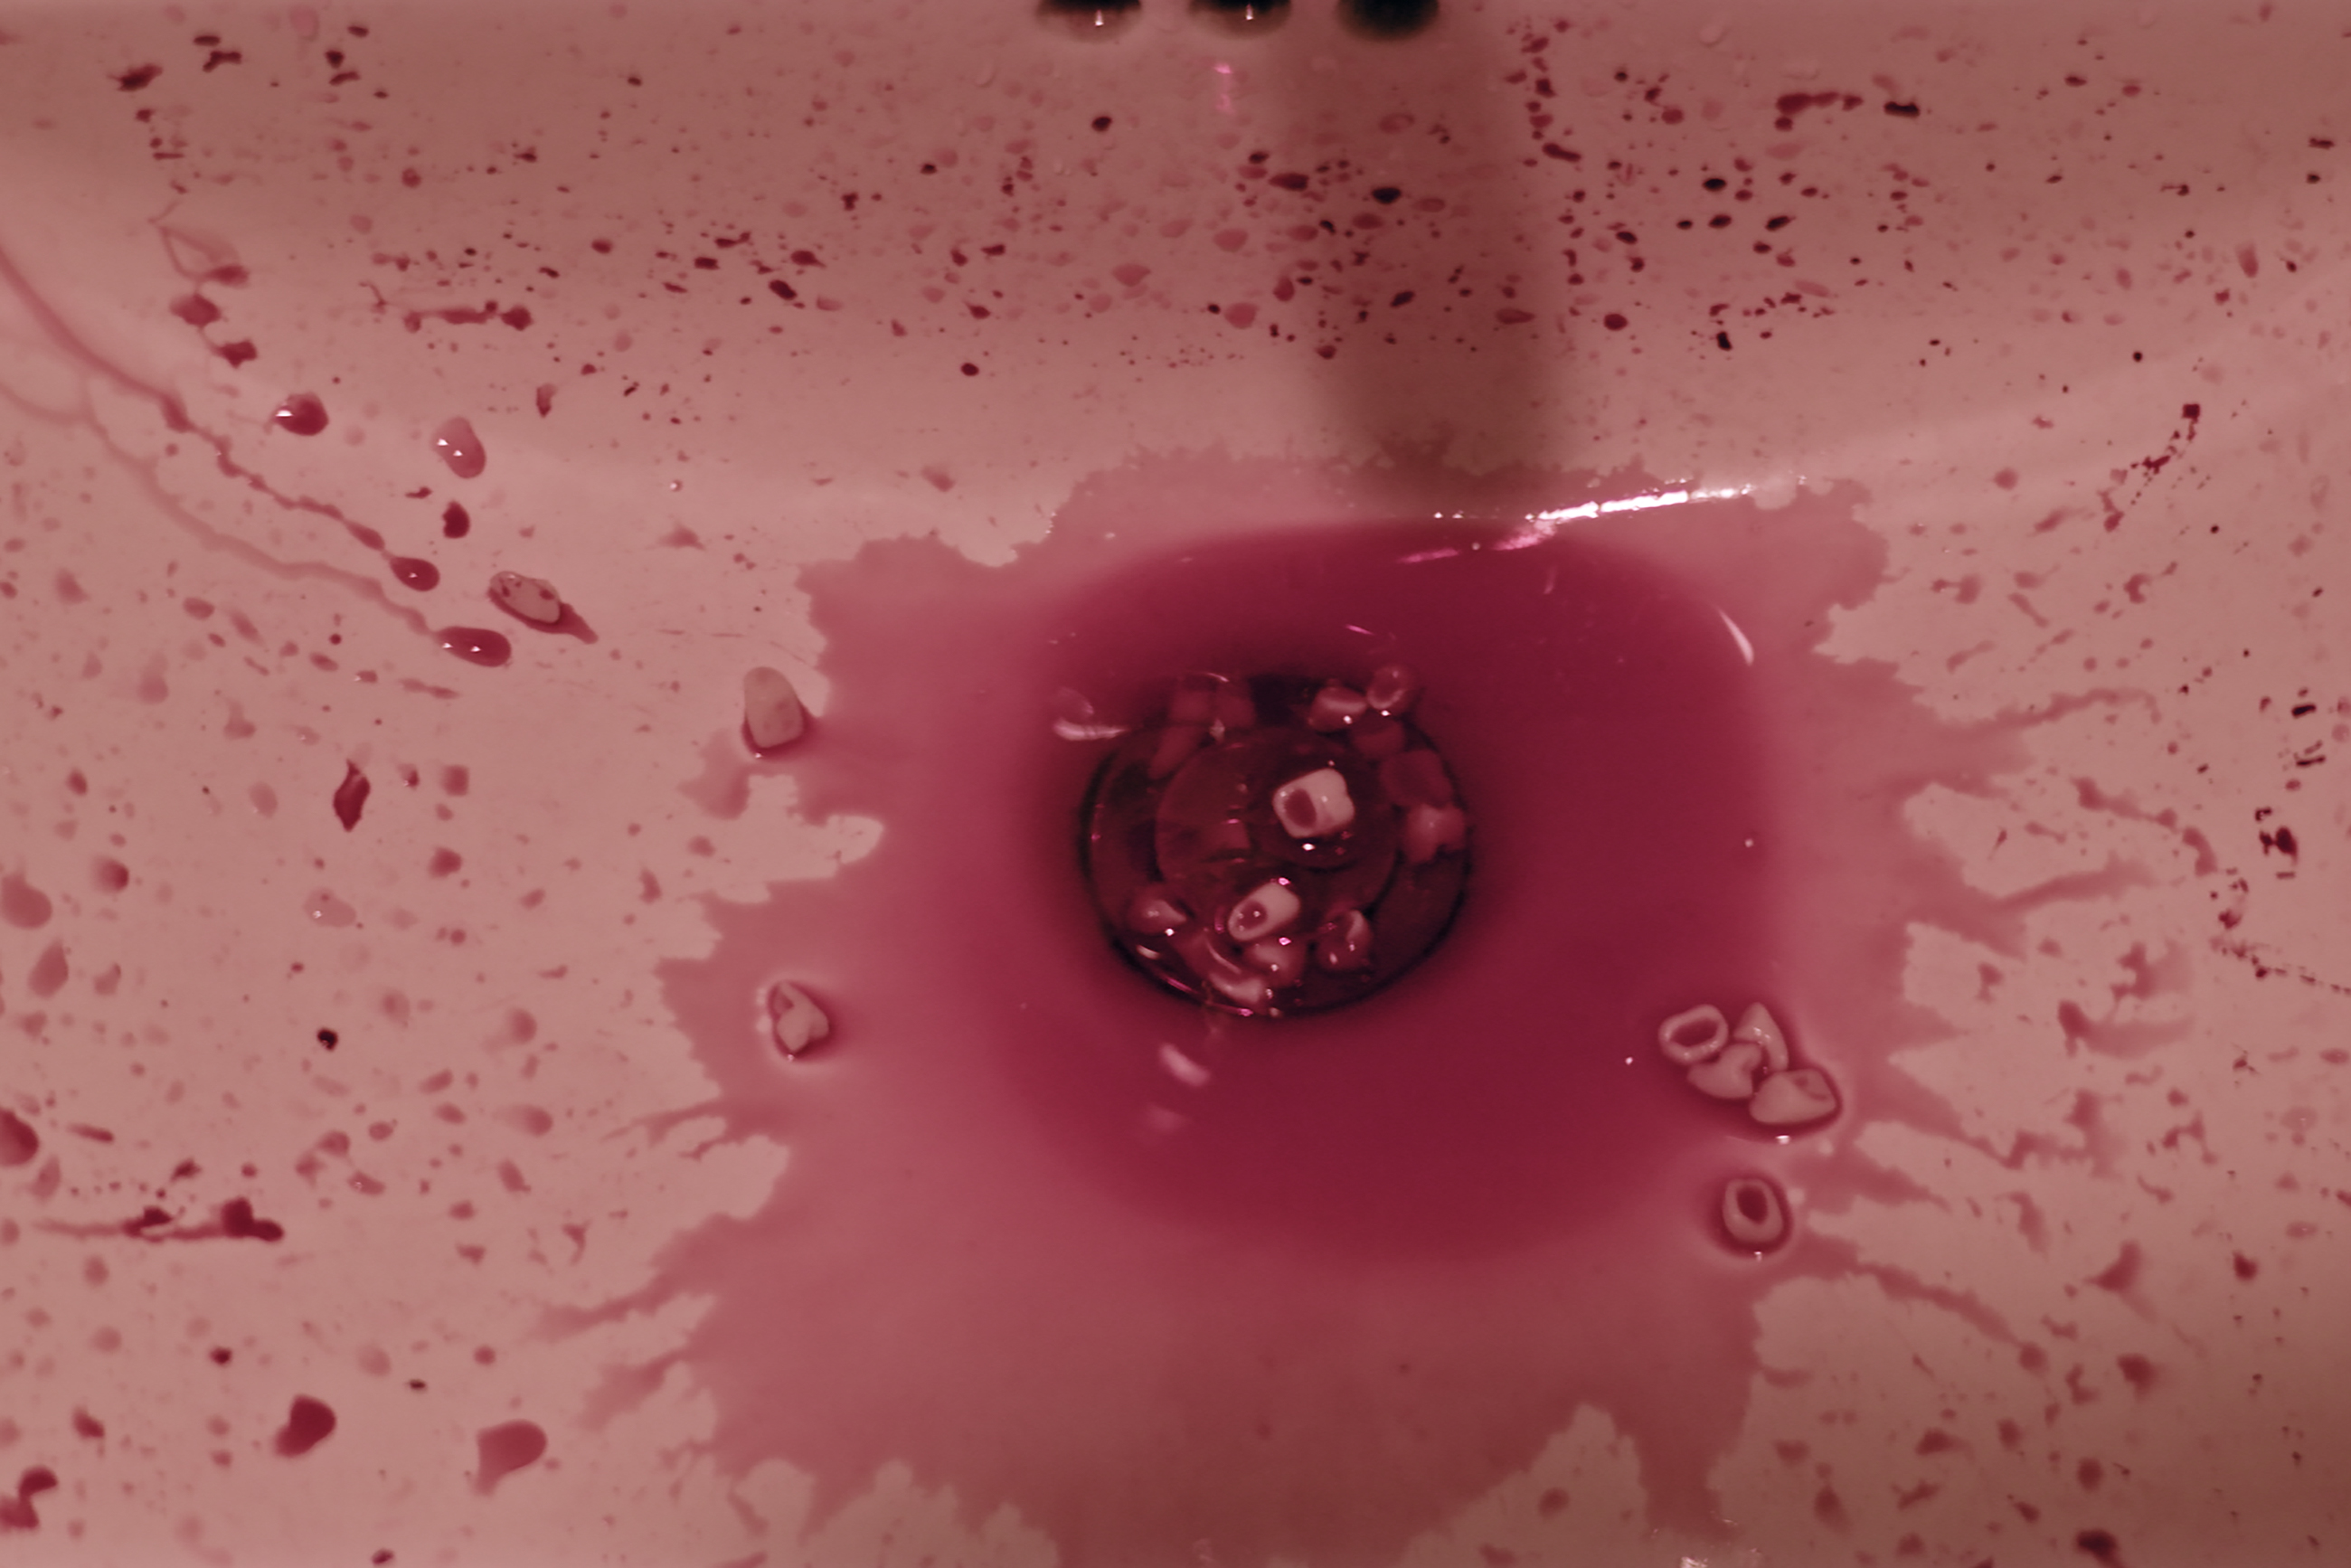 still from Aiden Kelly film showing bloody teeth in the bathroom sink